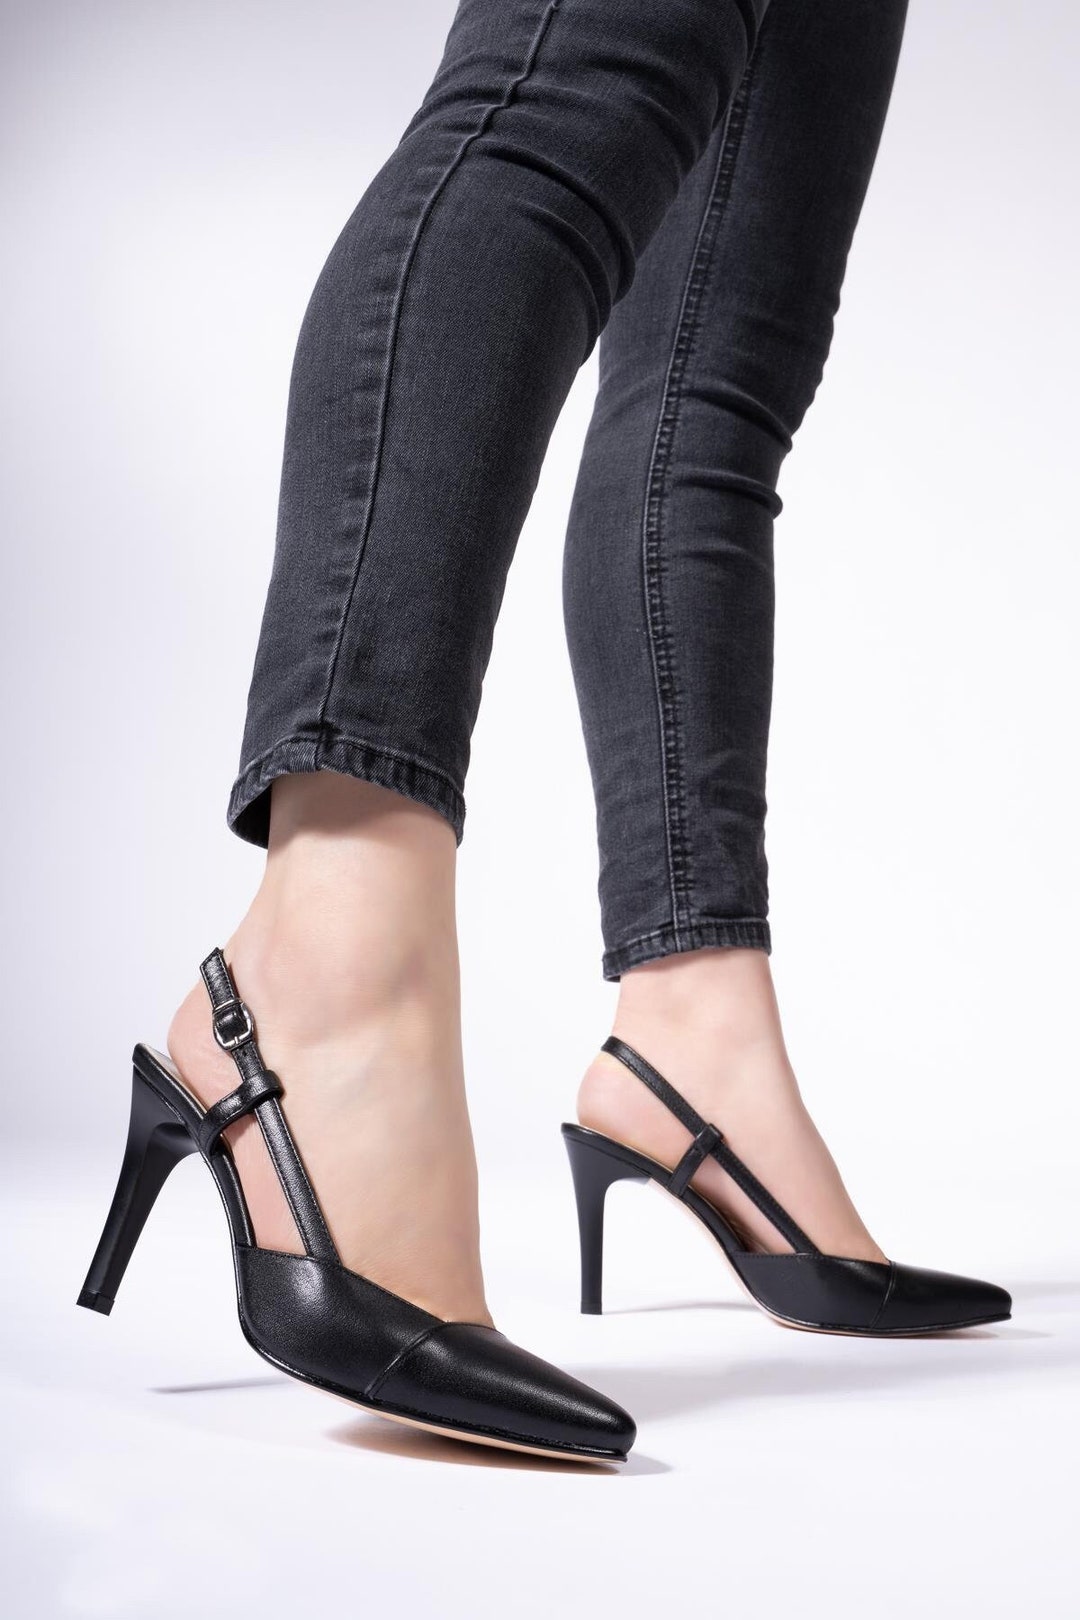 Callizio Women's Genuine Leather Sandals Woman High Thin Heels